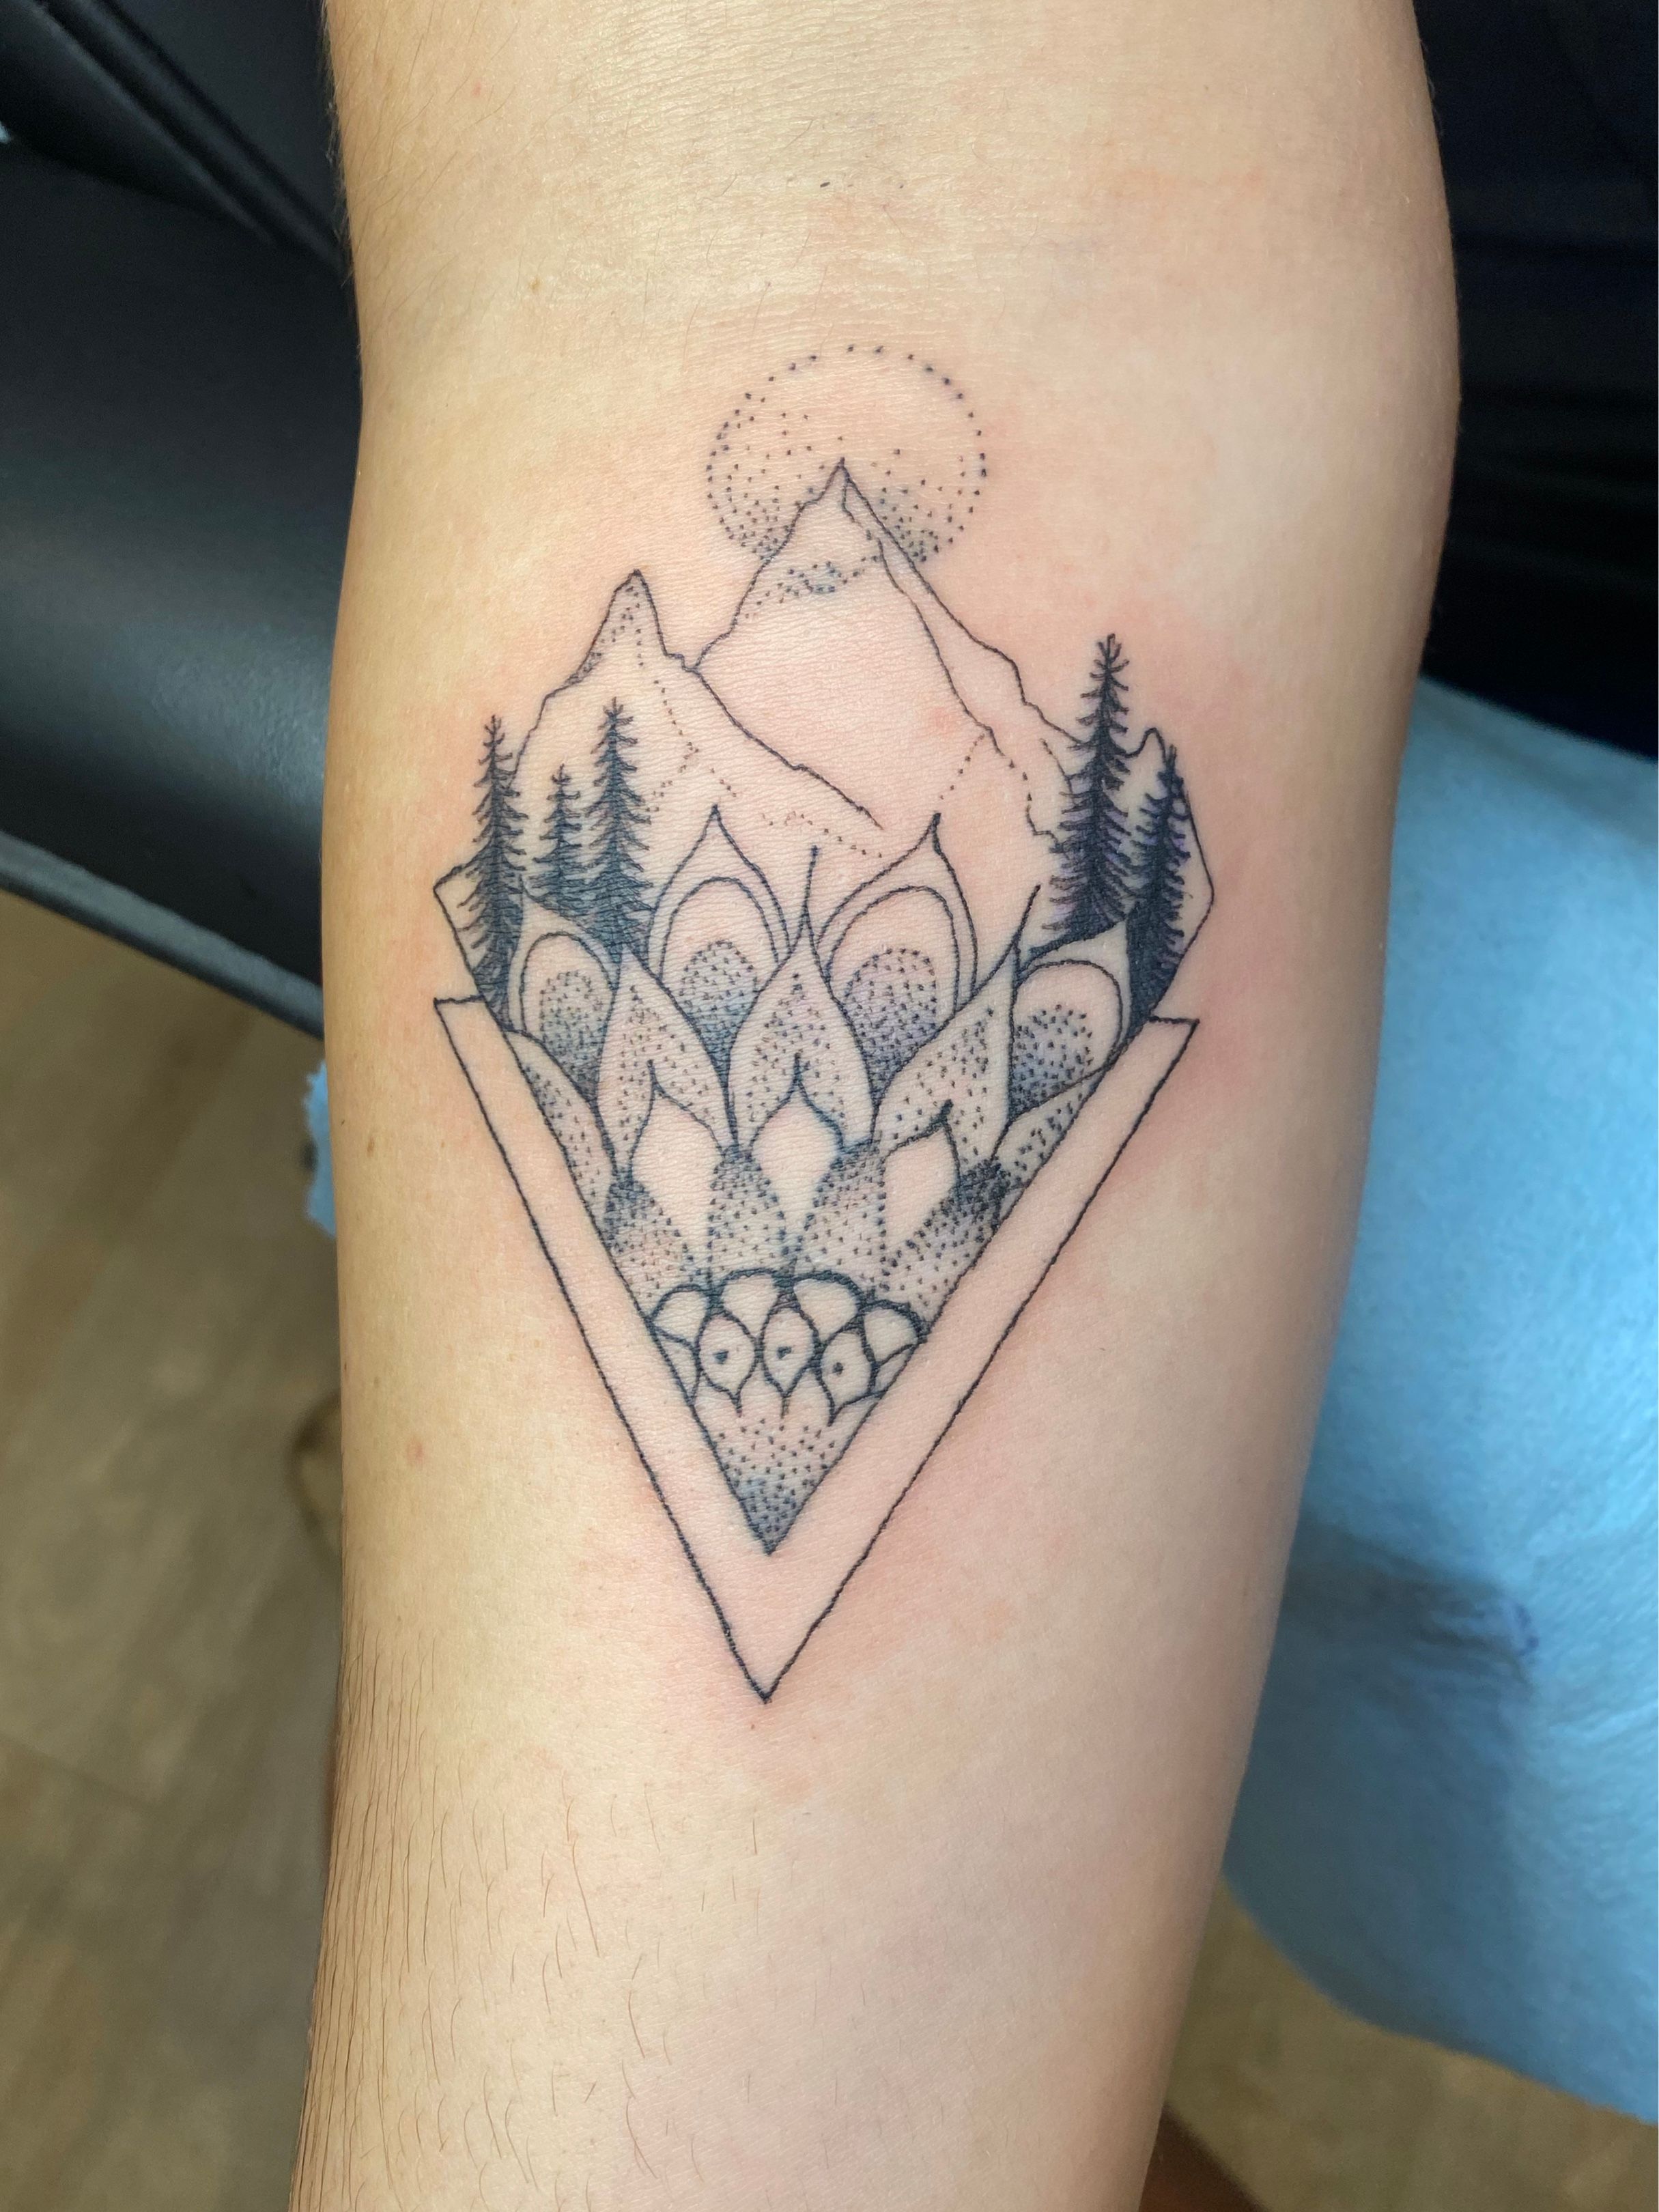 Levi Greenacres on Tumblr: #Mountain #tree #dotworktattoo. #tattoo #pdx  #portlandtattoo #naturetattoo